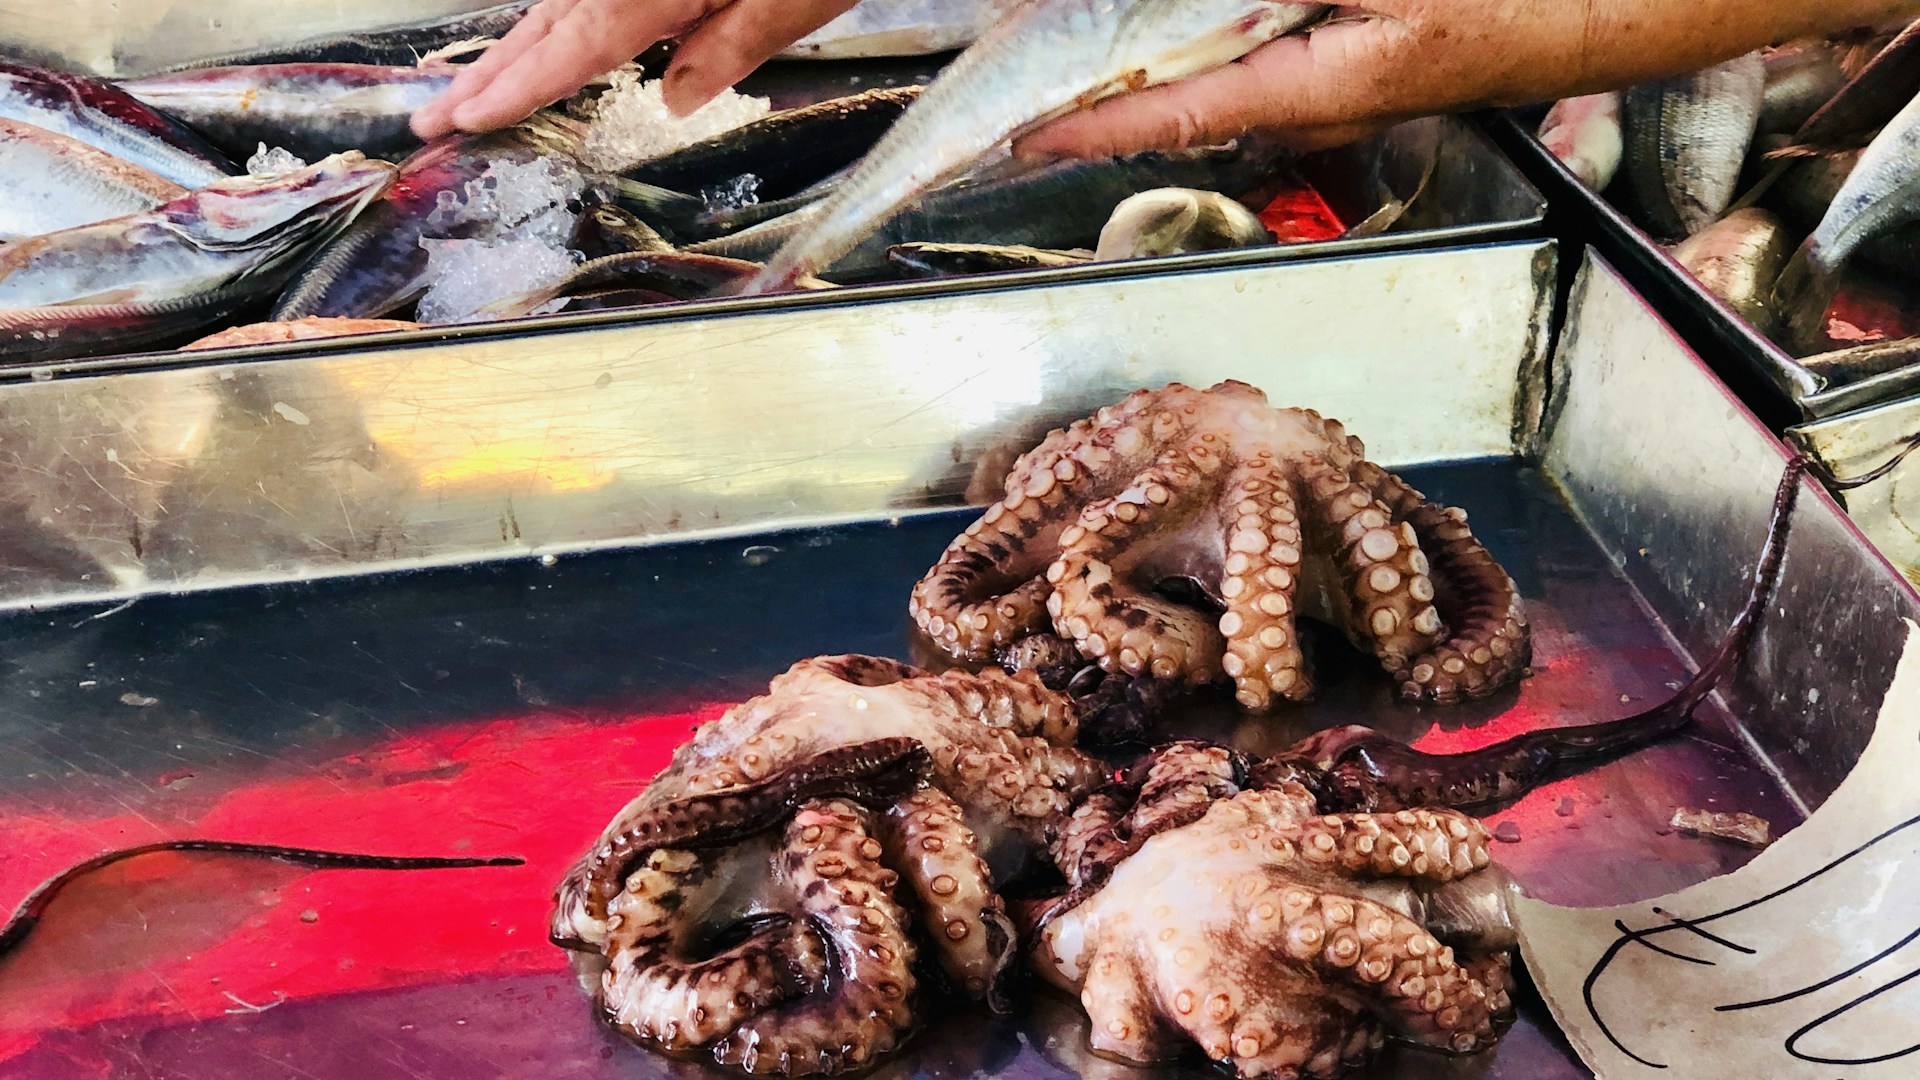 Marsaxlokk Fish Market